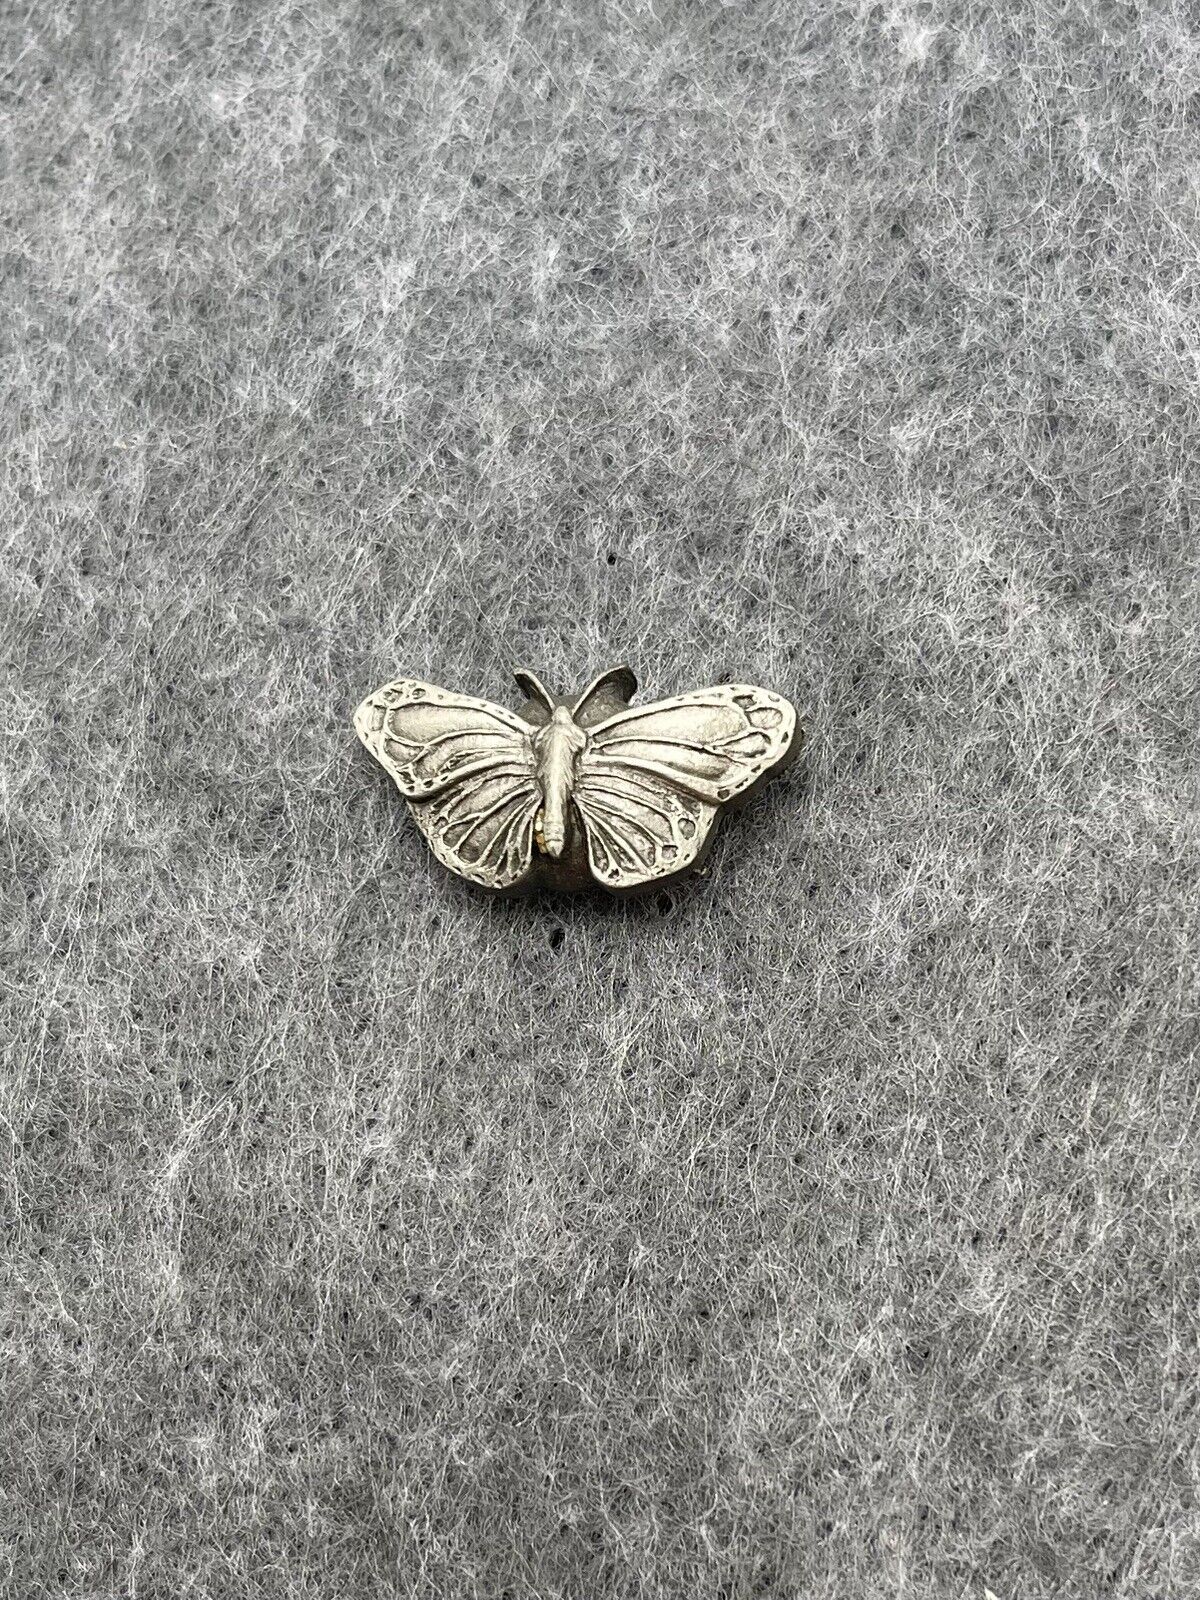 Silver Tone Butterfly Lapel Pin Unmarked